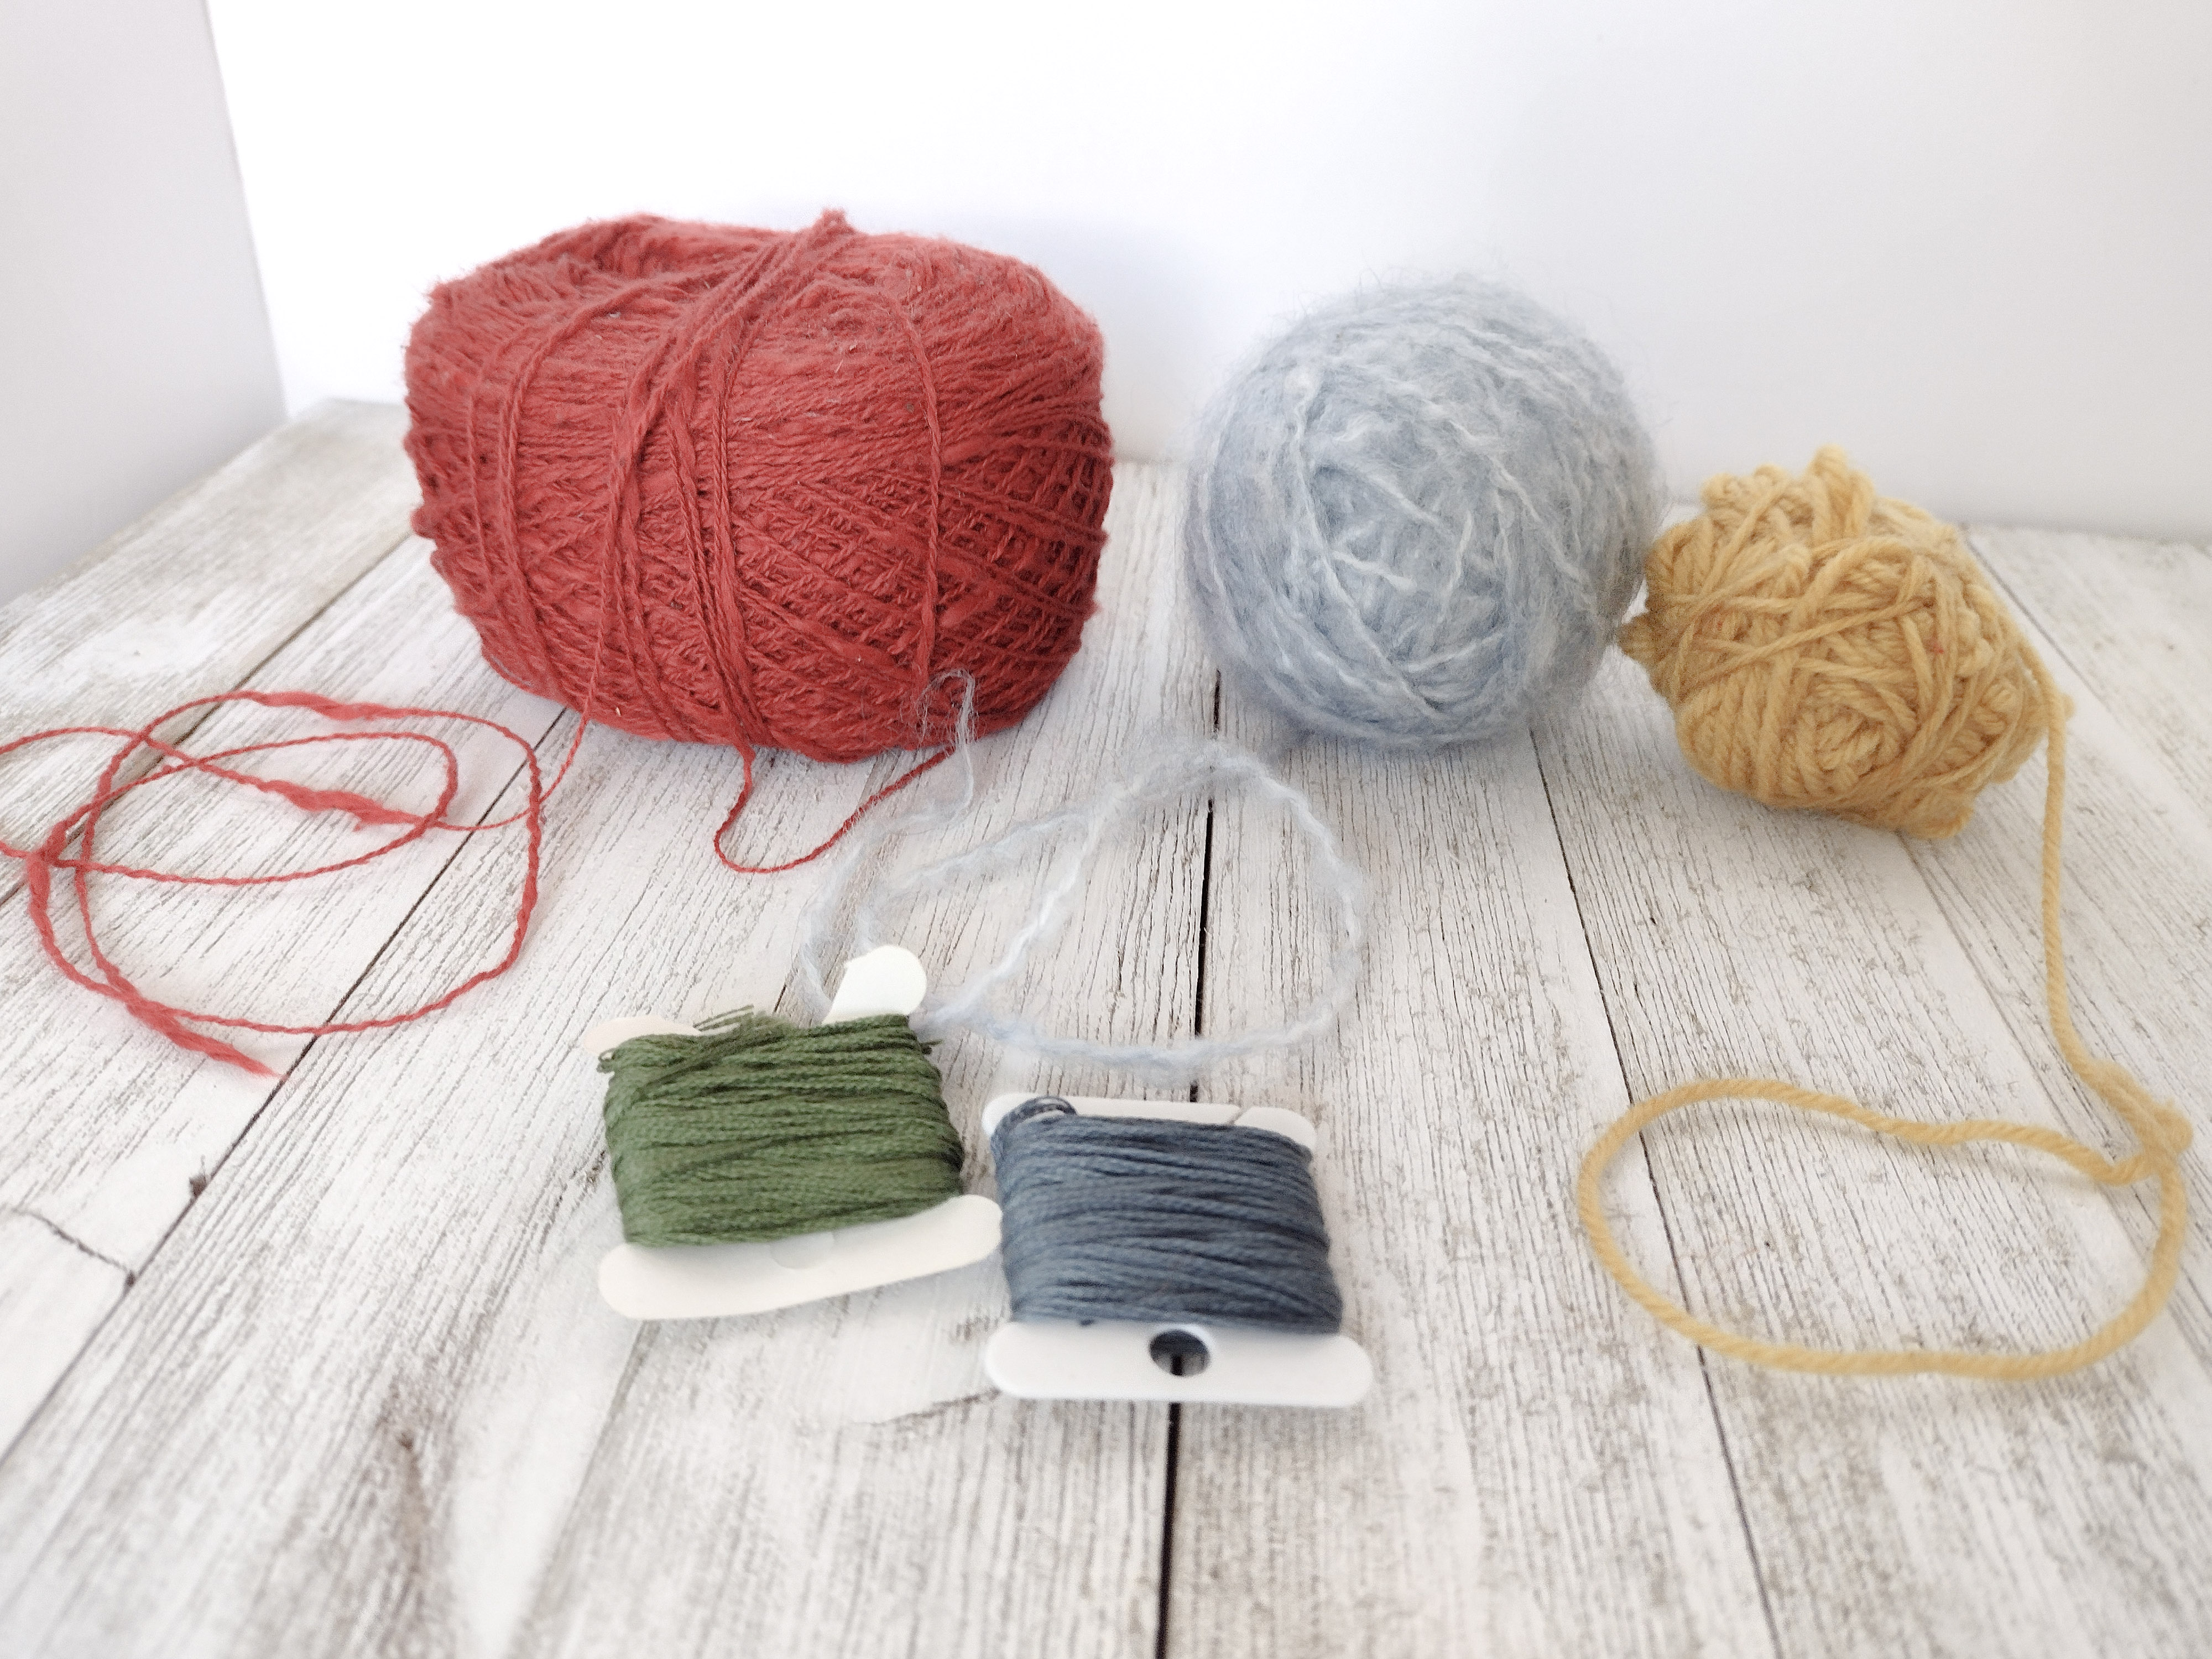 thin yarn, embroidery floss